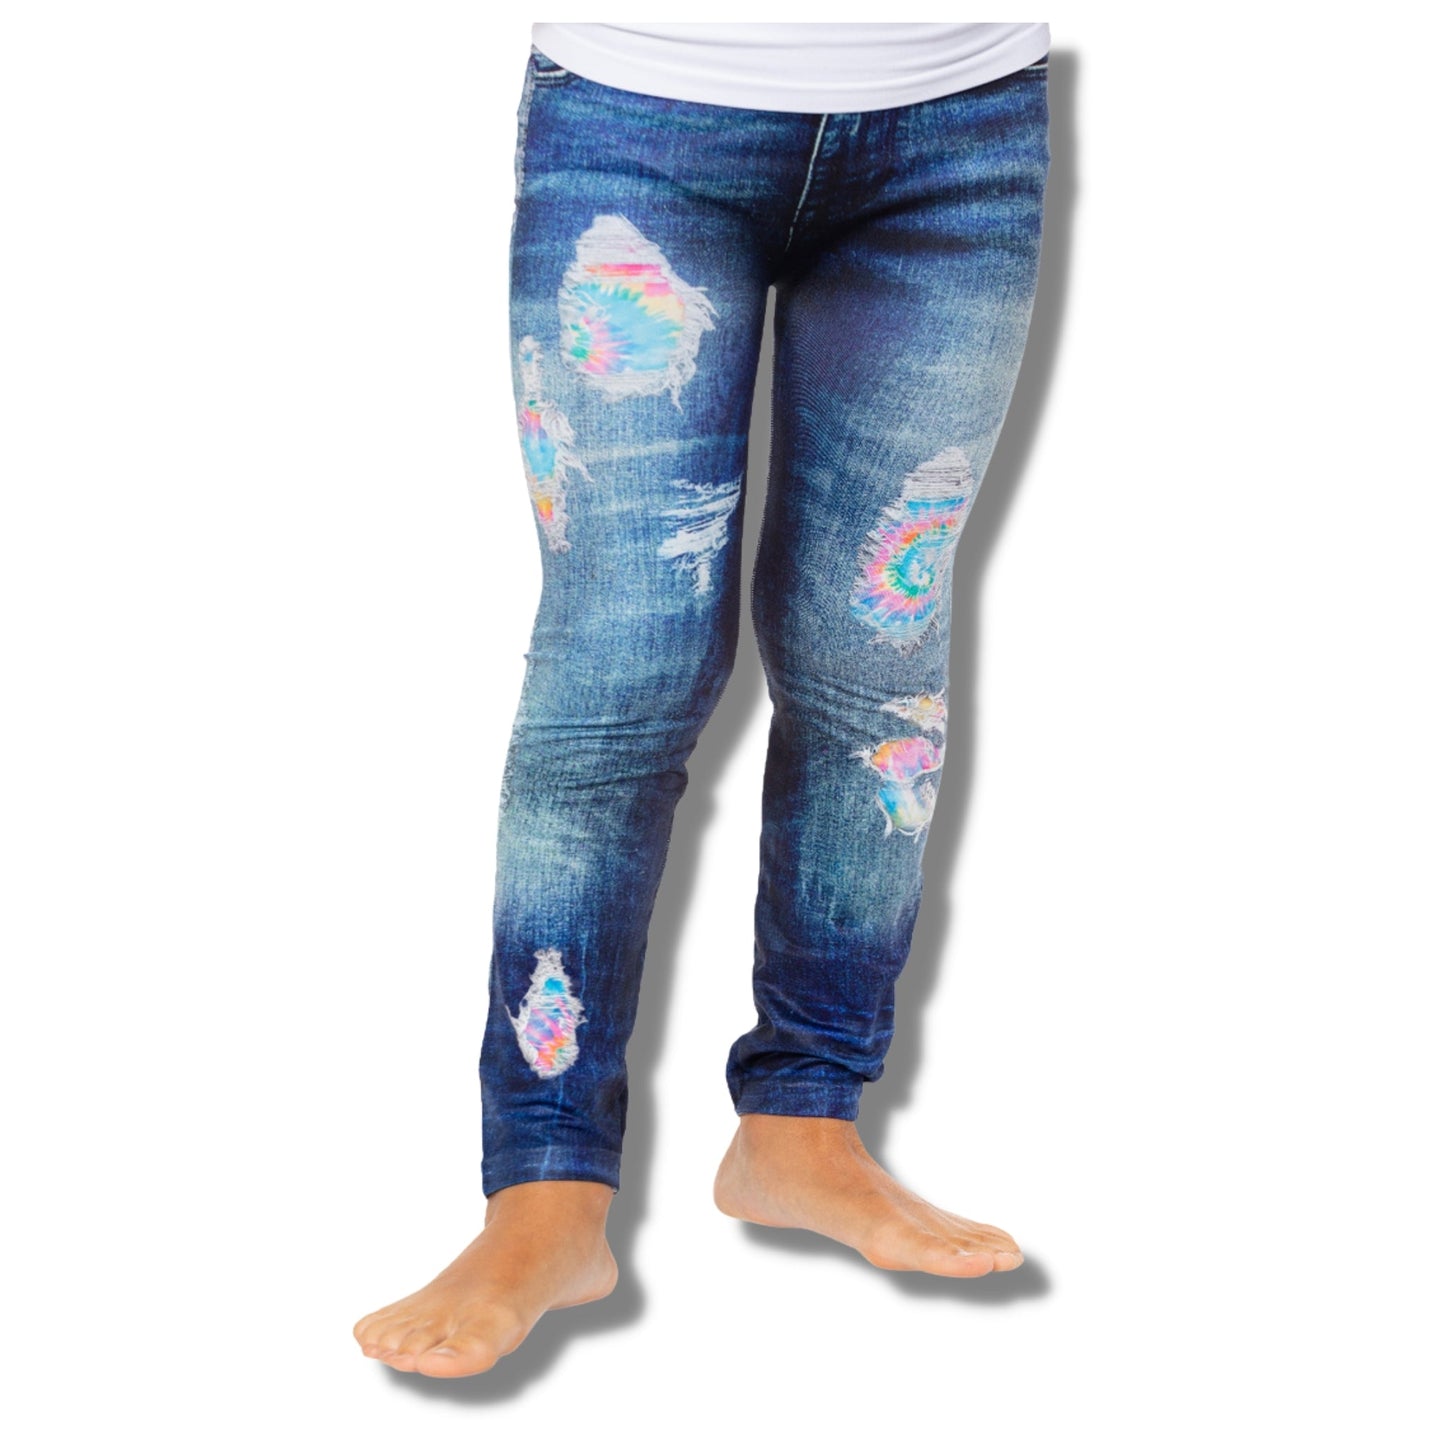 Malibu Sugar Little Girl's Denim Jean Printed Leggings w/ Tie Dye Patches (4-6x) - a Spirit Animal - leggings $45-$60 bottoms denim